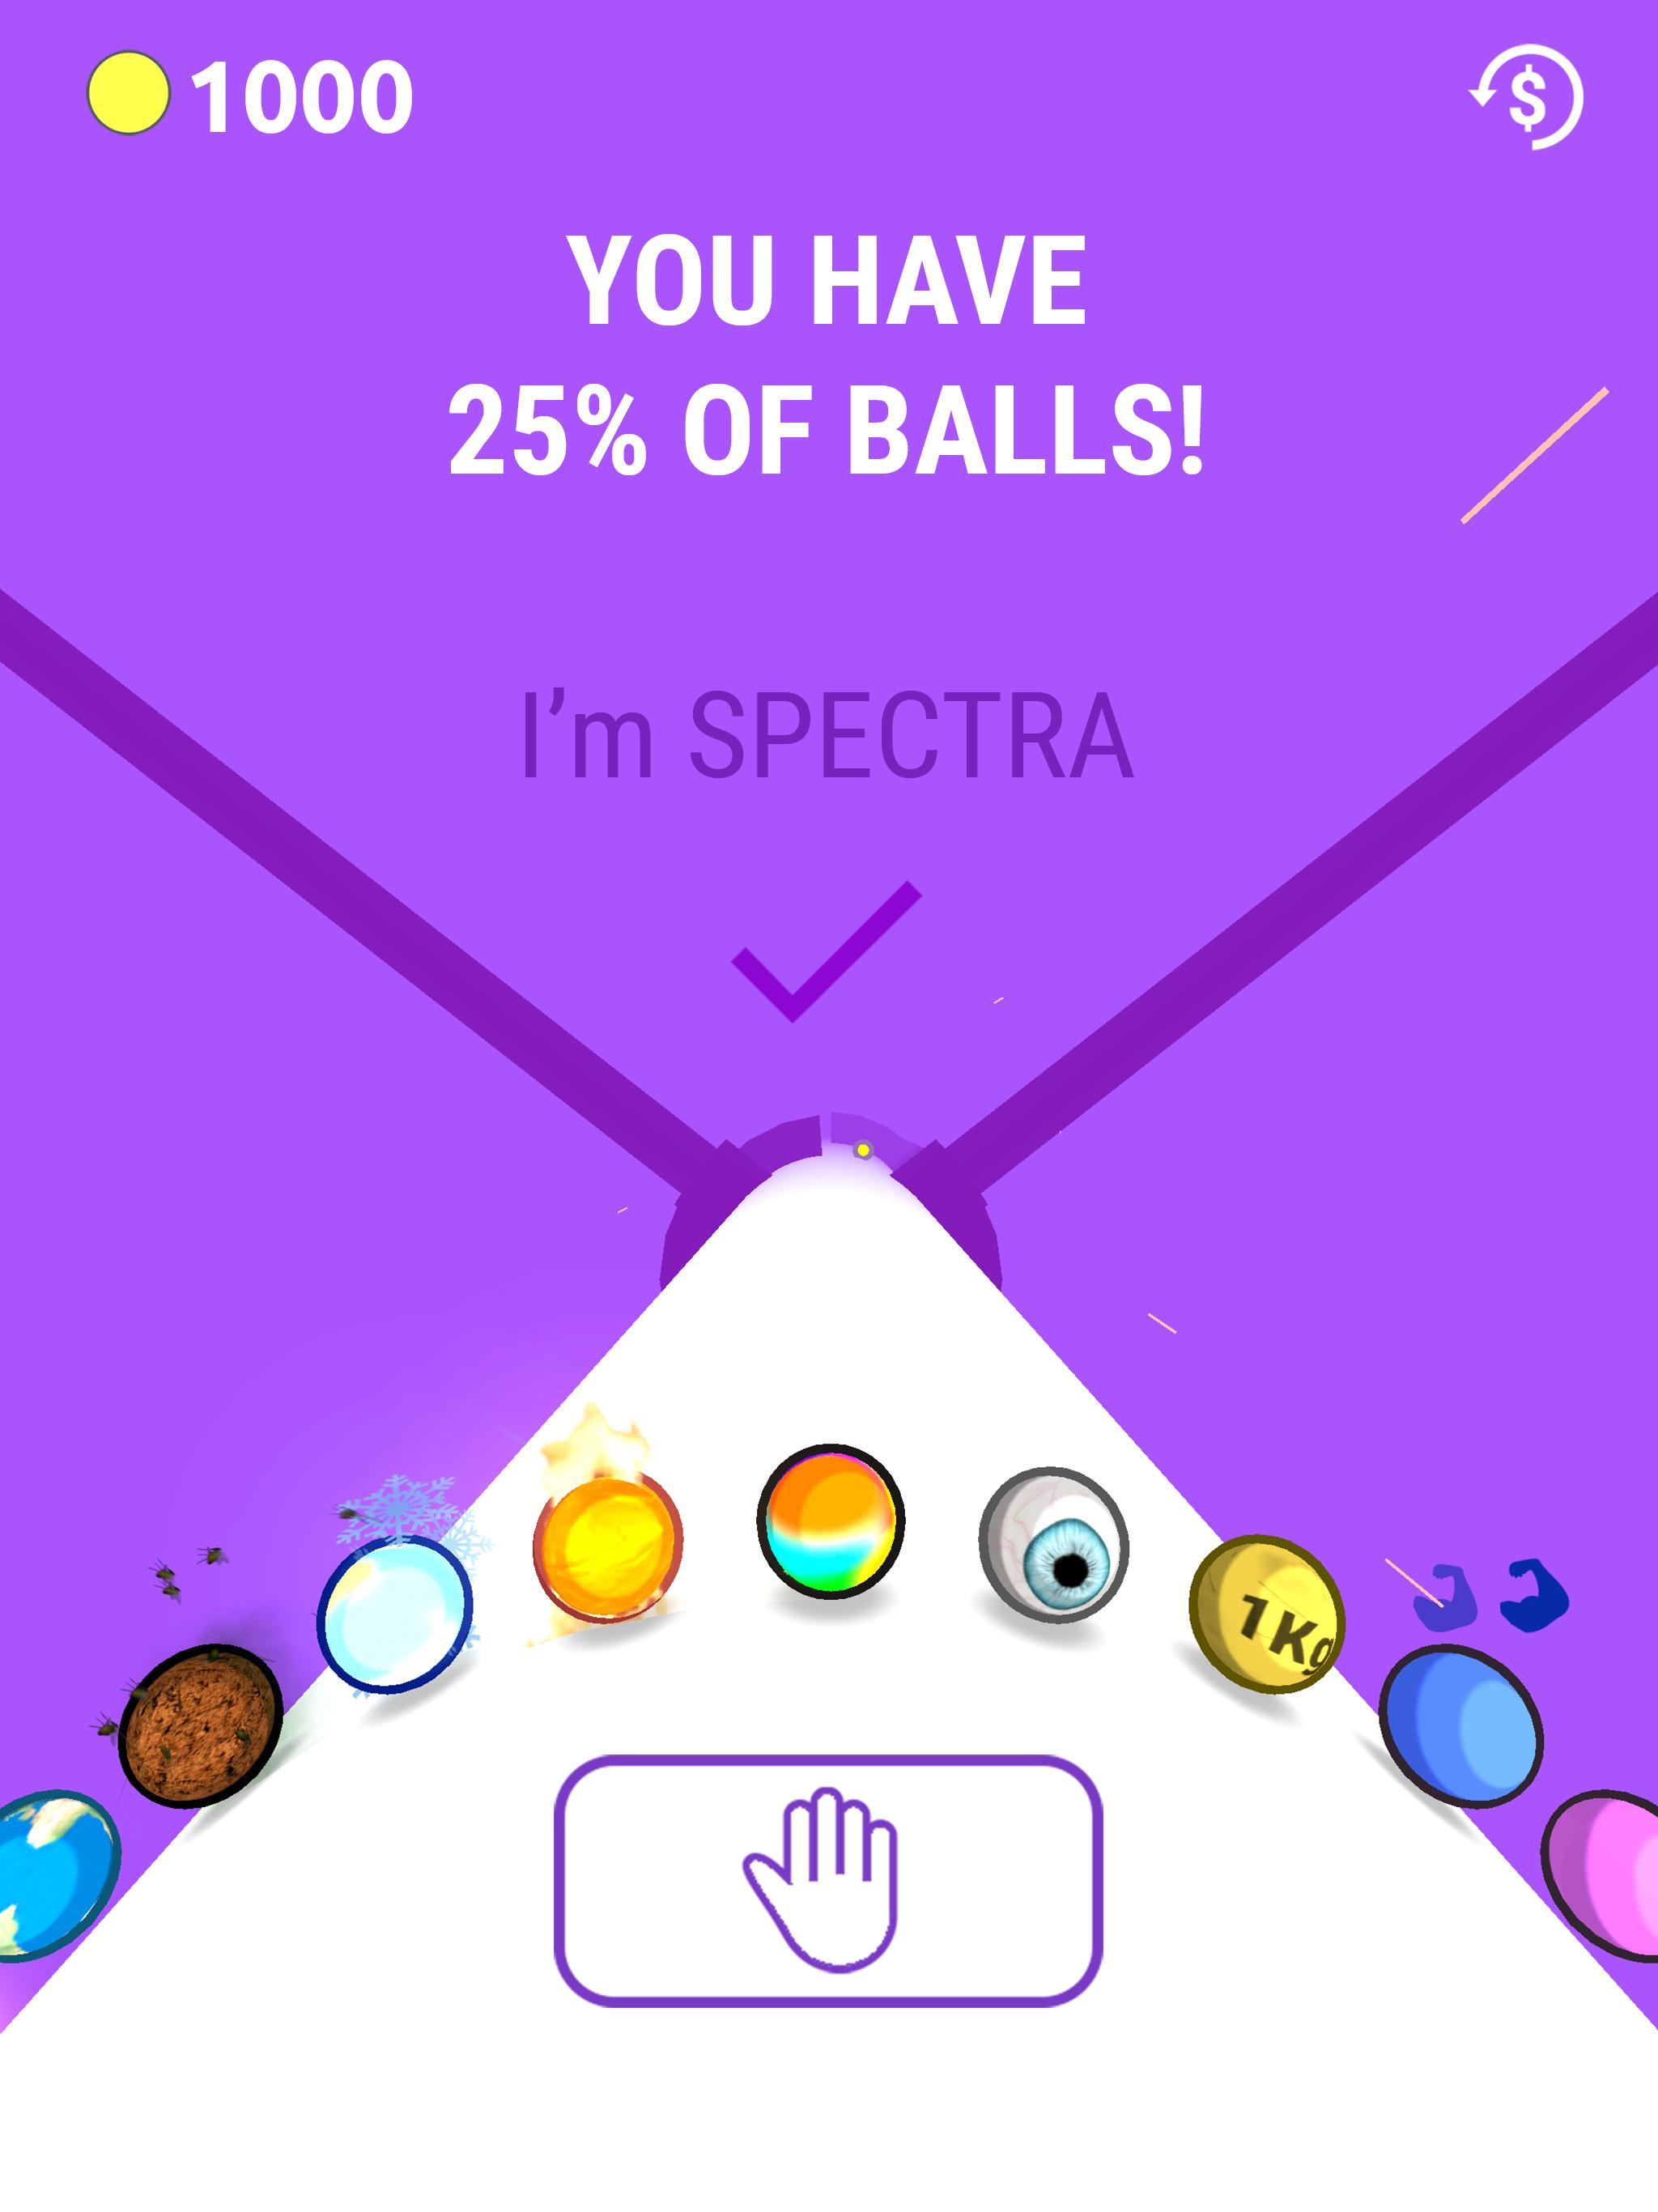 Screenshot of Spin